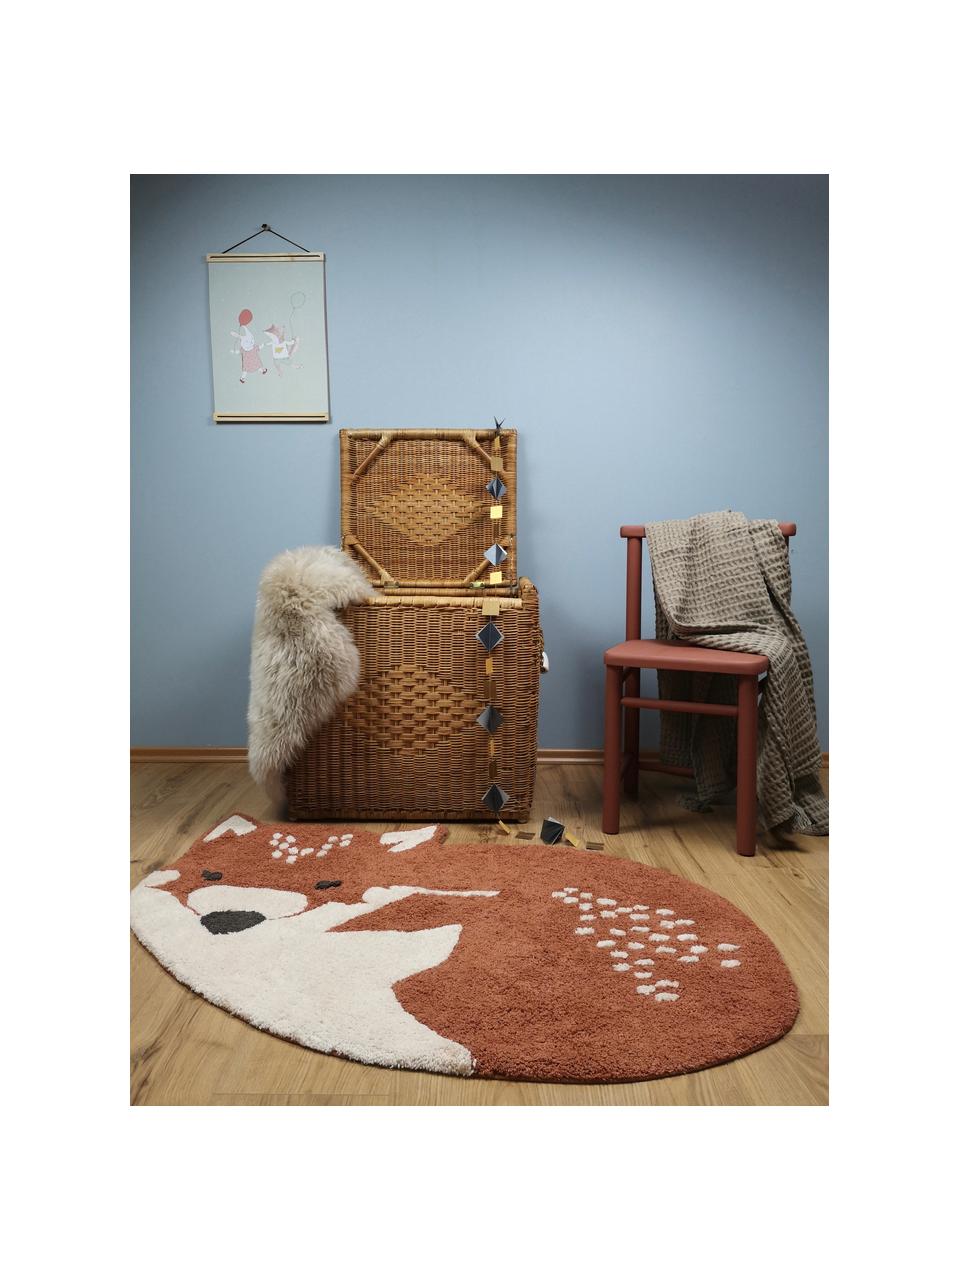 Kinderteppich Little Fox, Baumwolle, Nougat, Hellbeige, B 110 x L 70 cm